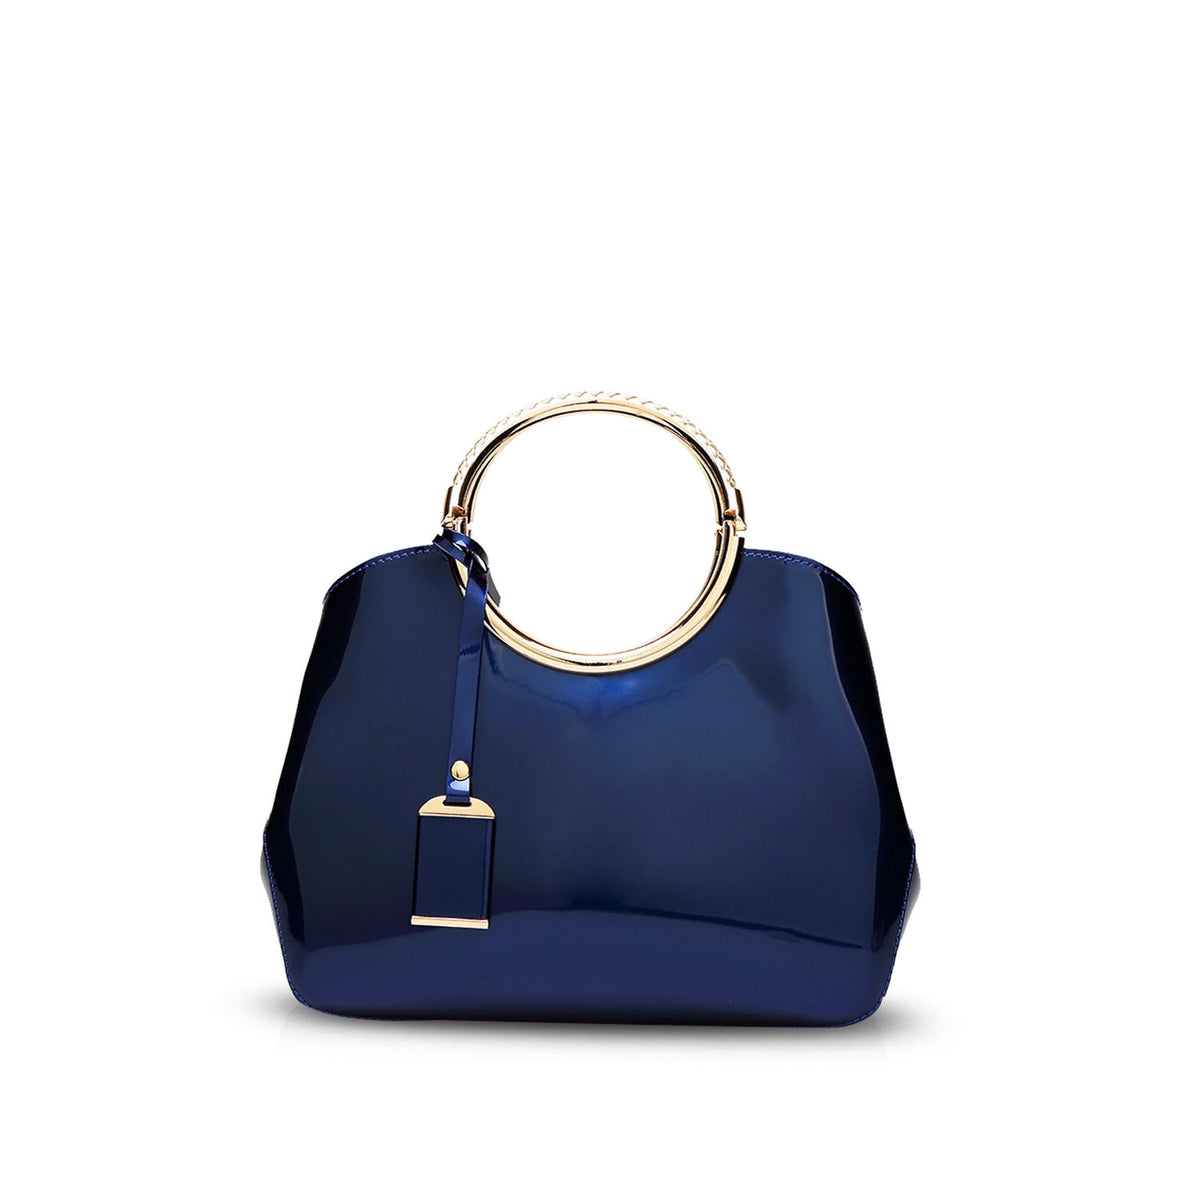 Nicole&Doris Handbag for Ladies Top Handle Bag Shoulder Bag Purse Bag ...